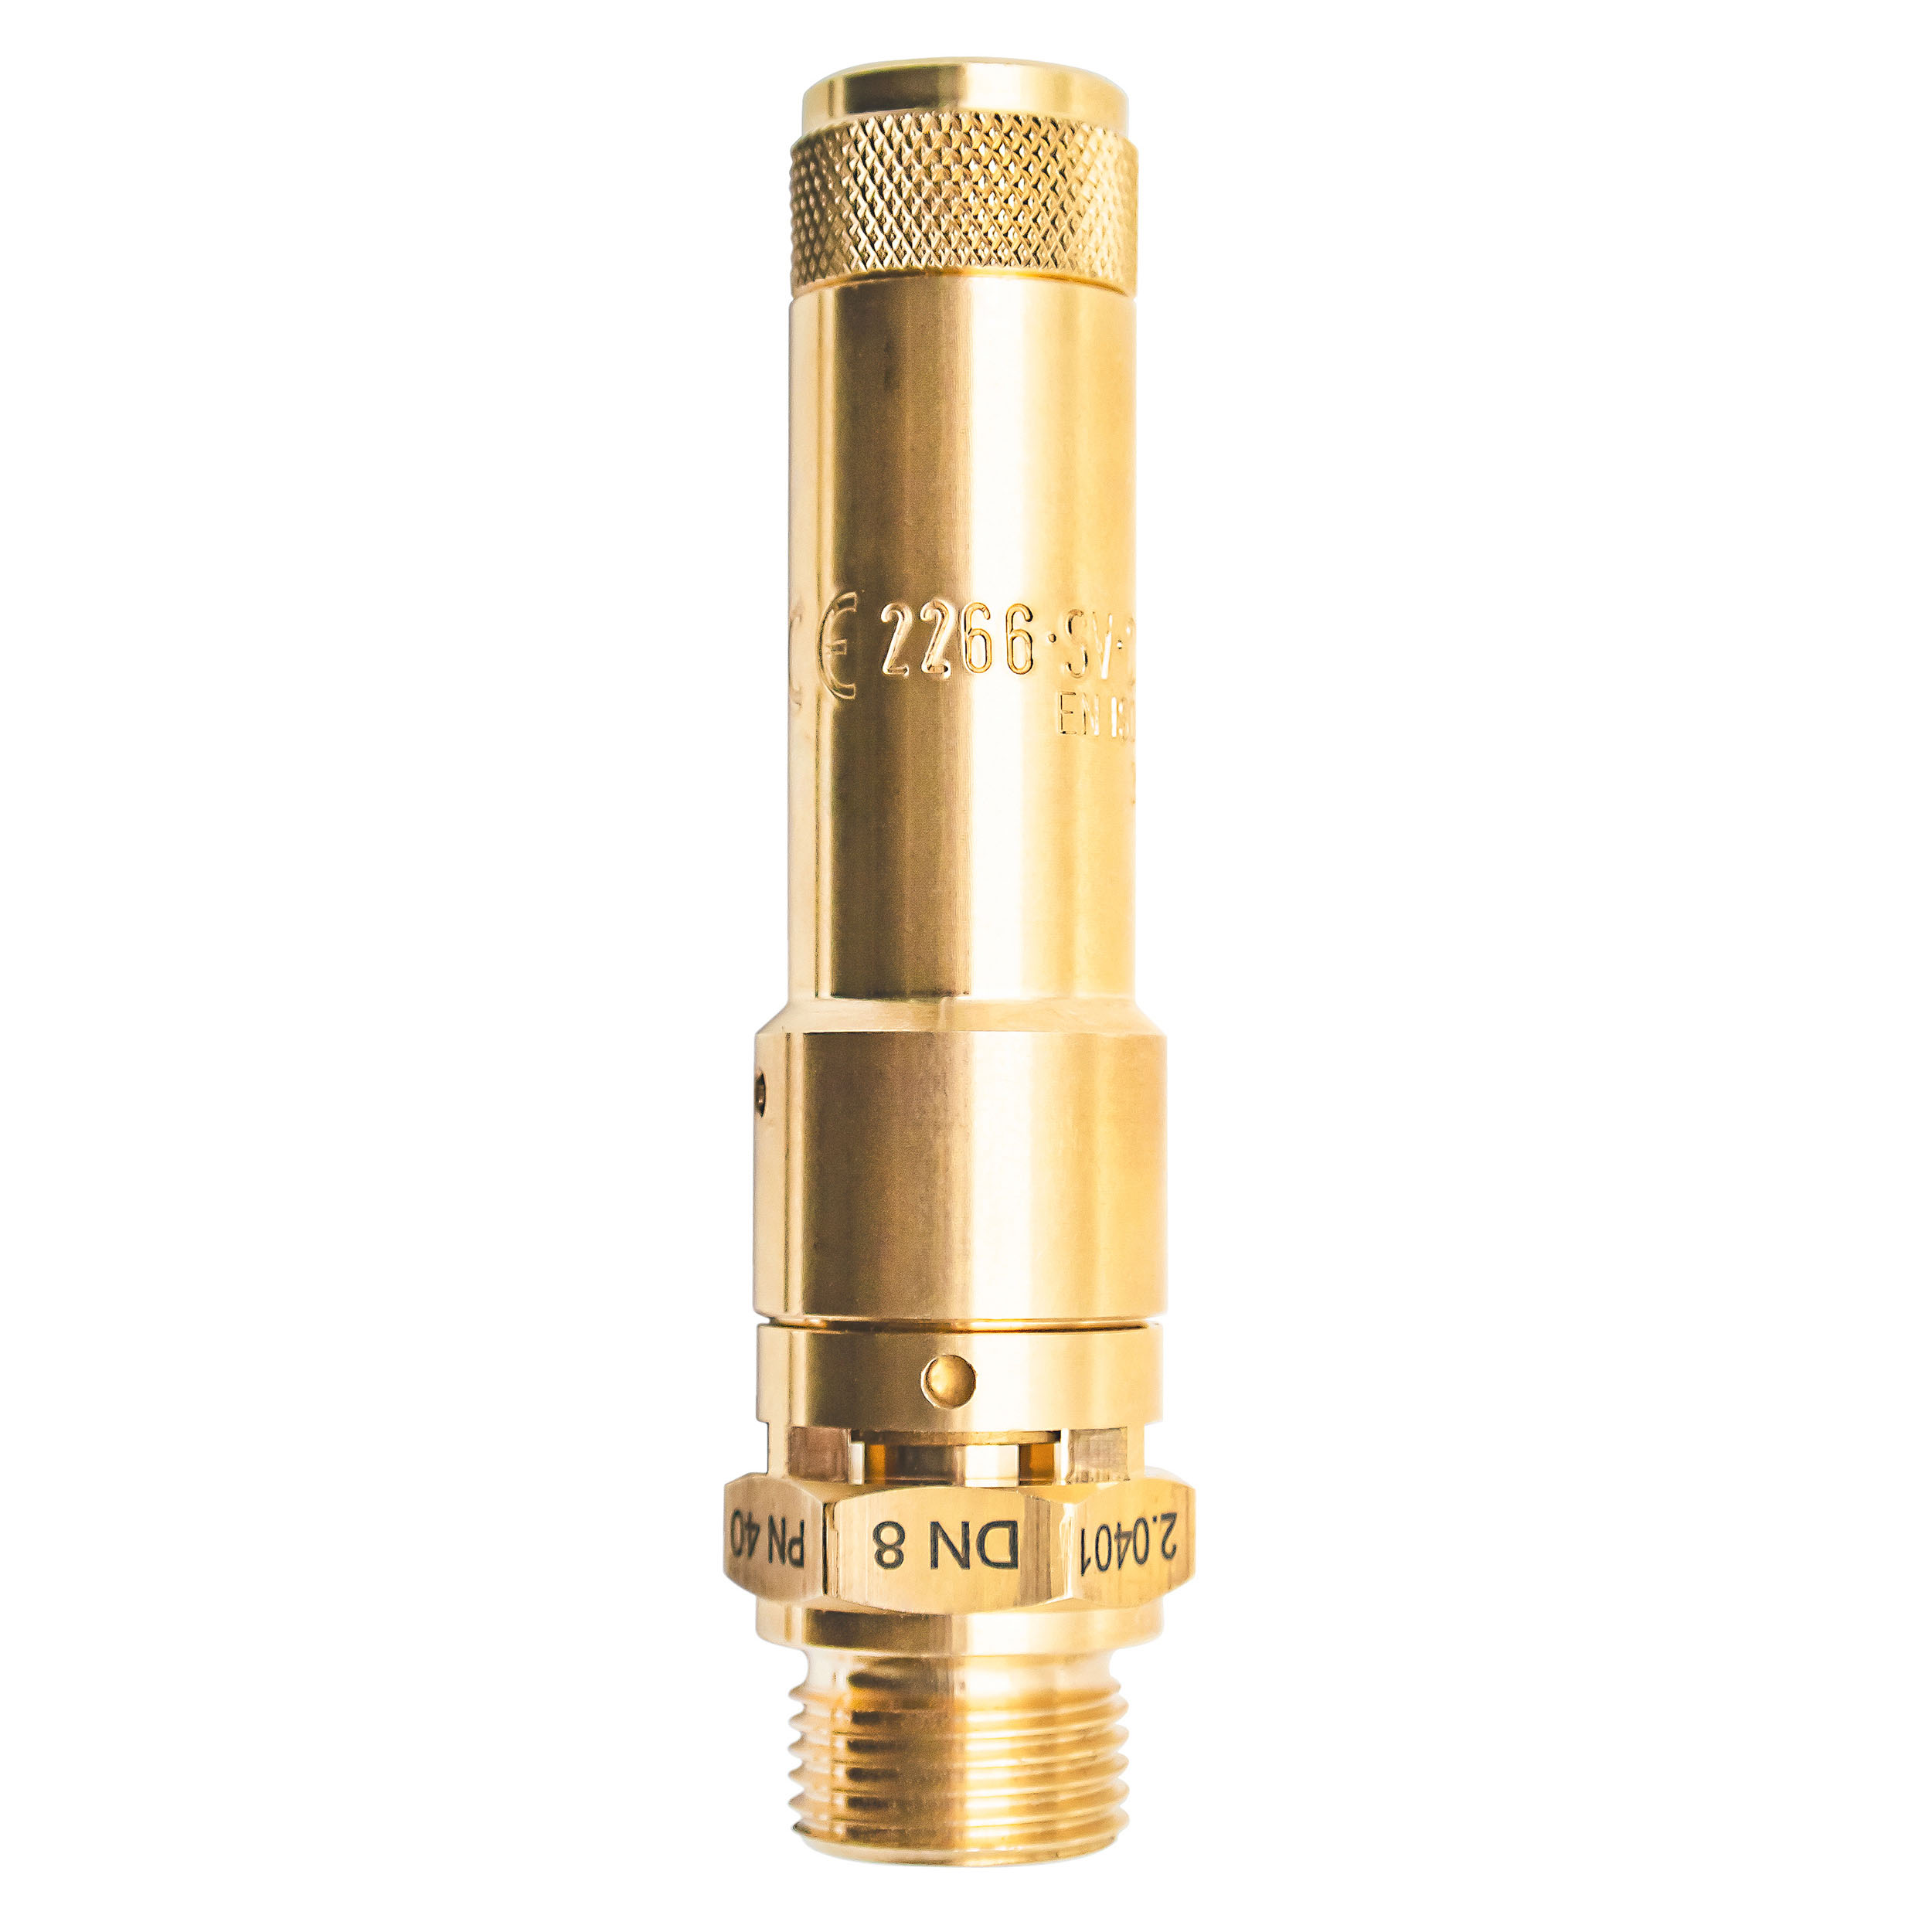 Component-tested safety valve DN 8, G¼, pressure: 1-1.5 bar